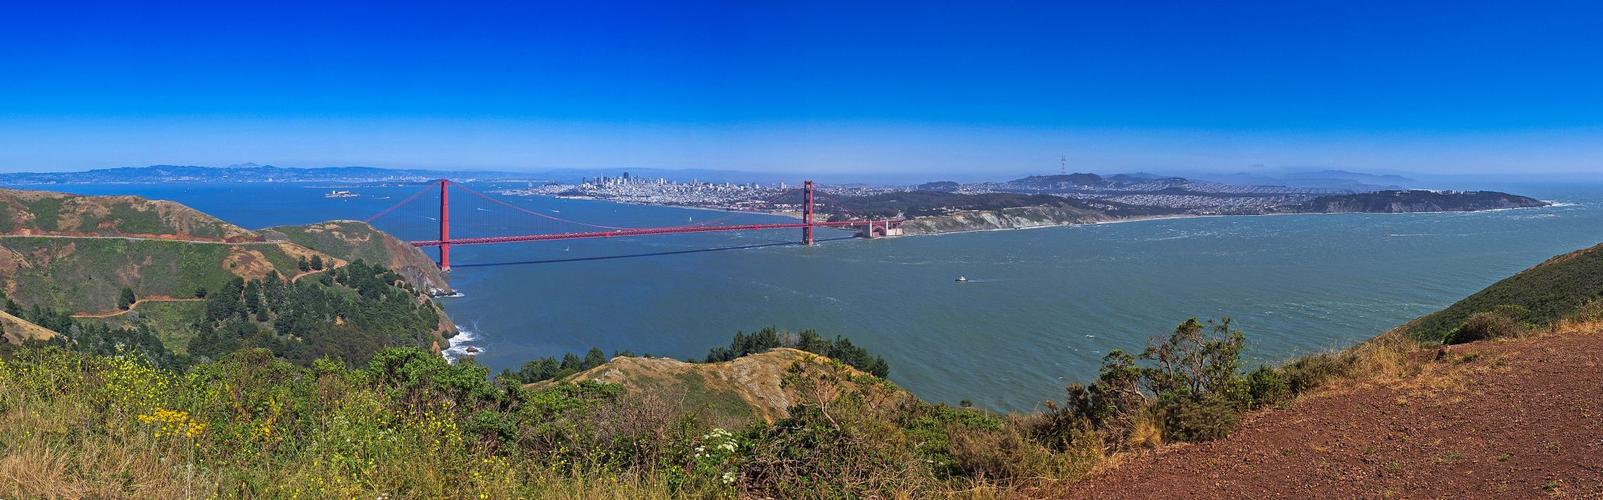 The Golden-Gate-Bridge in its splendor